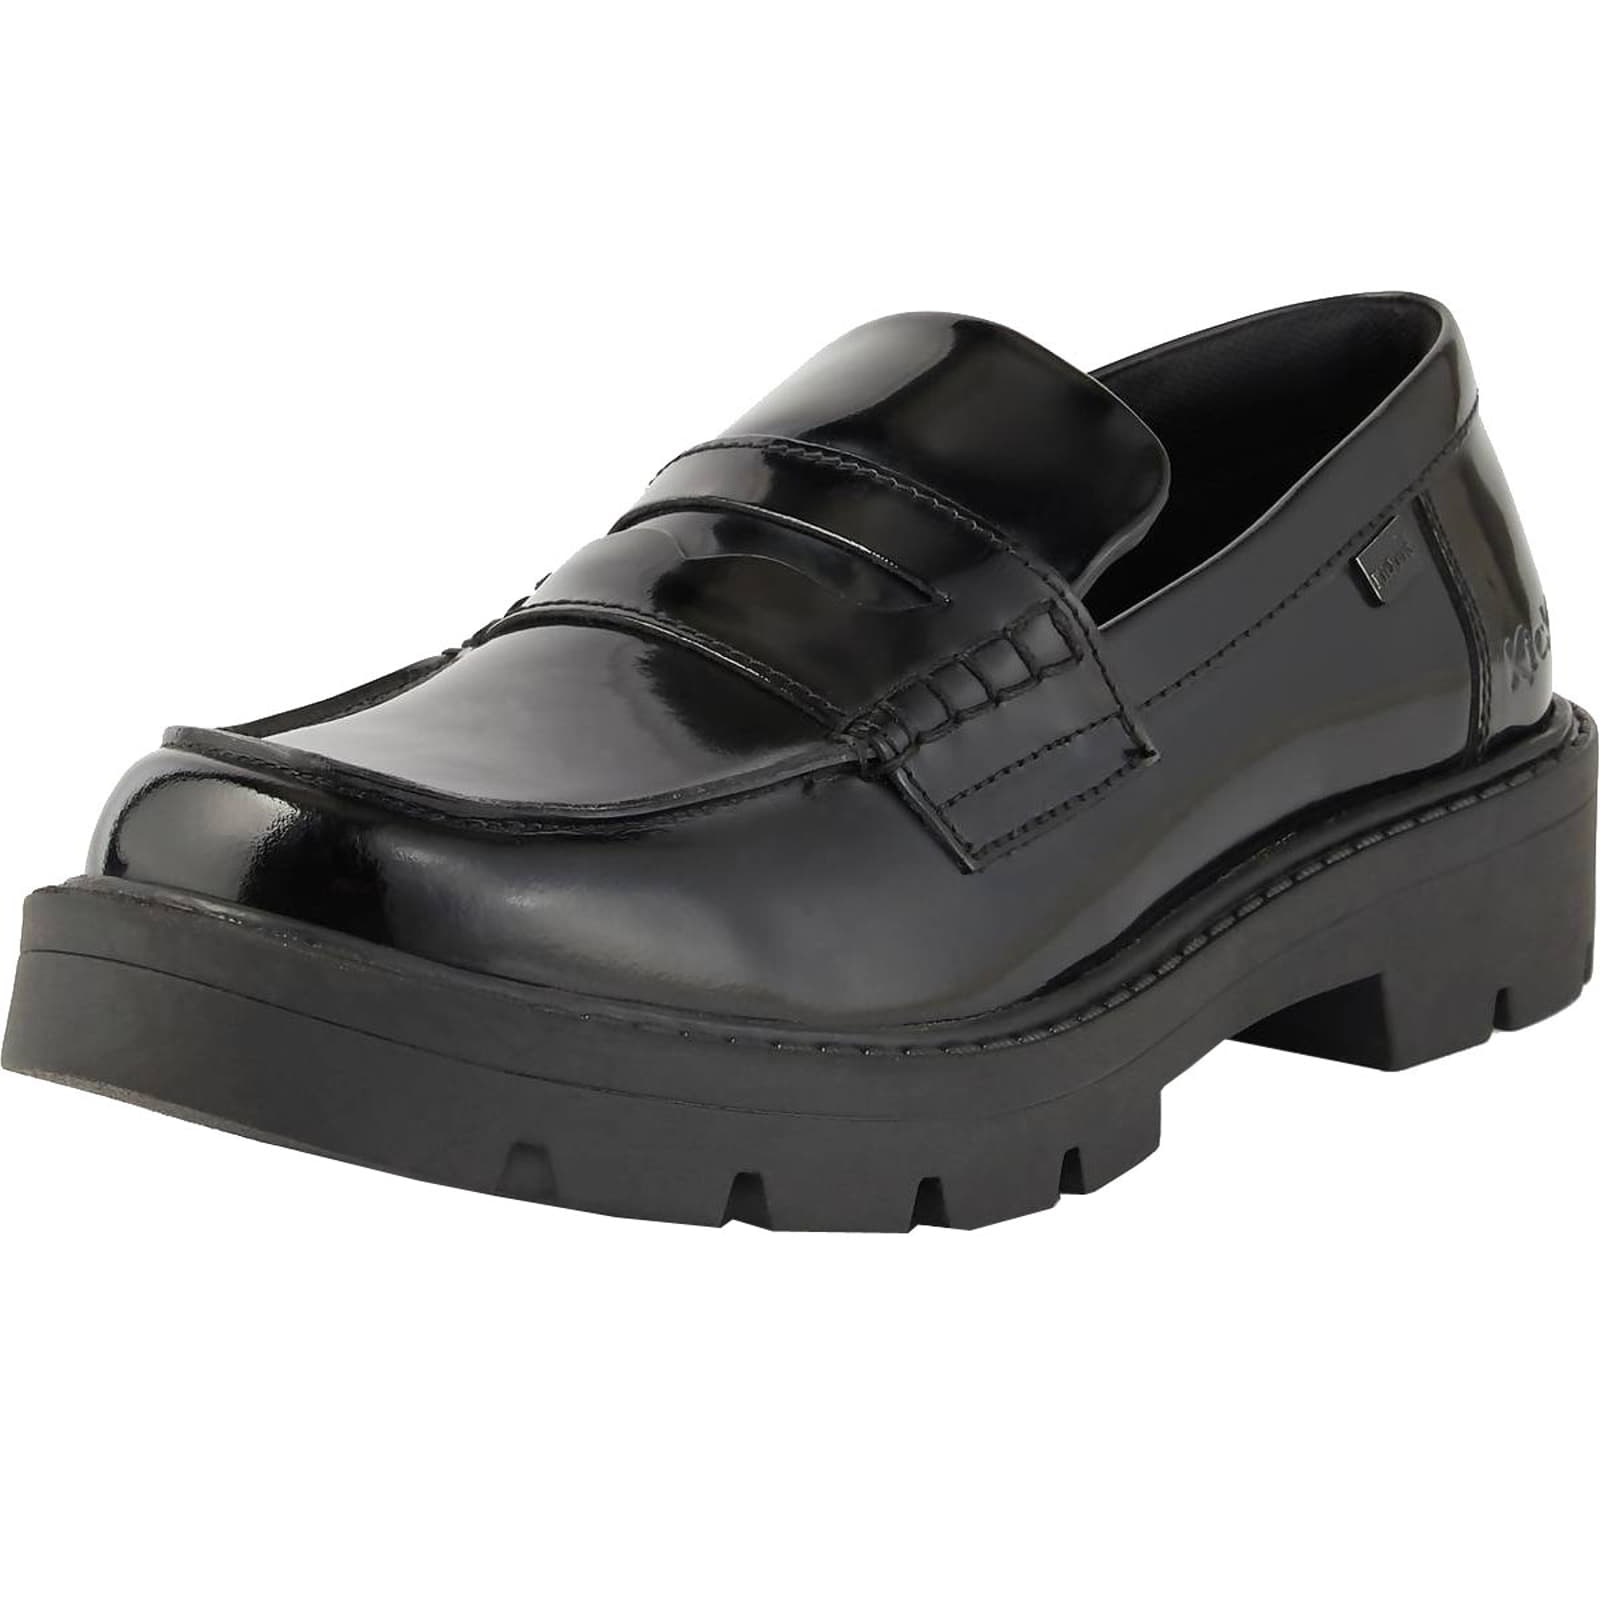 Kickers Women's Kori Loafer Leather Shoes  - UK 6 / EU 39